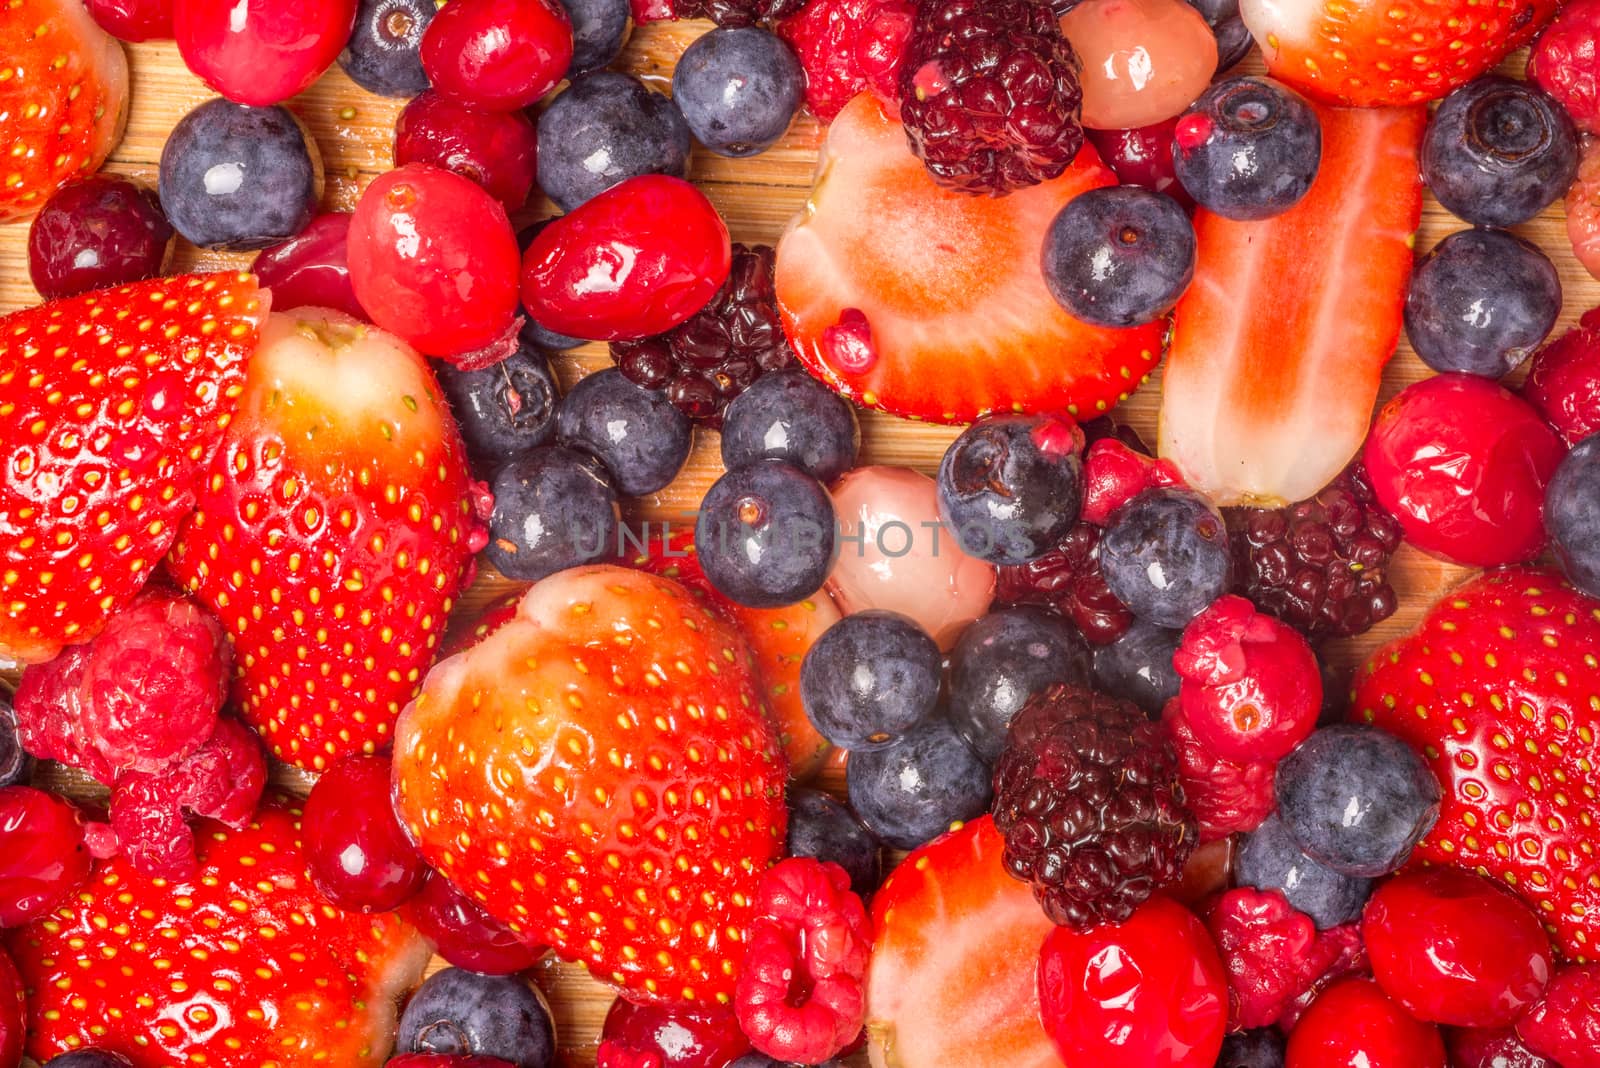 Mixed Berries by JFJacobsz